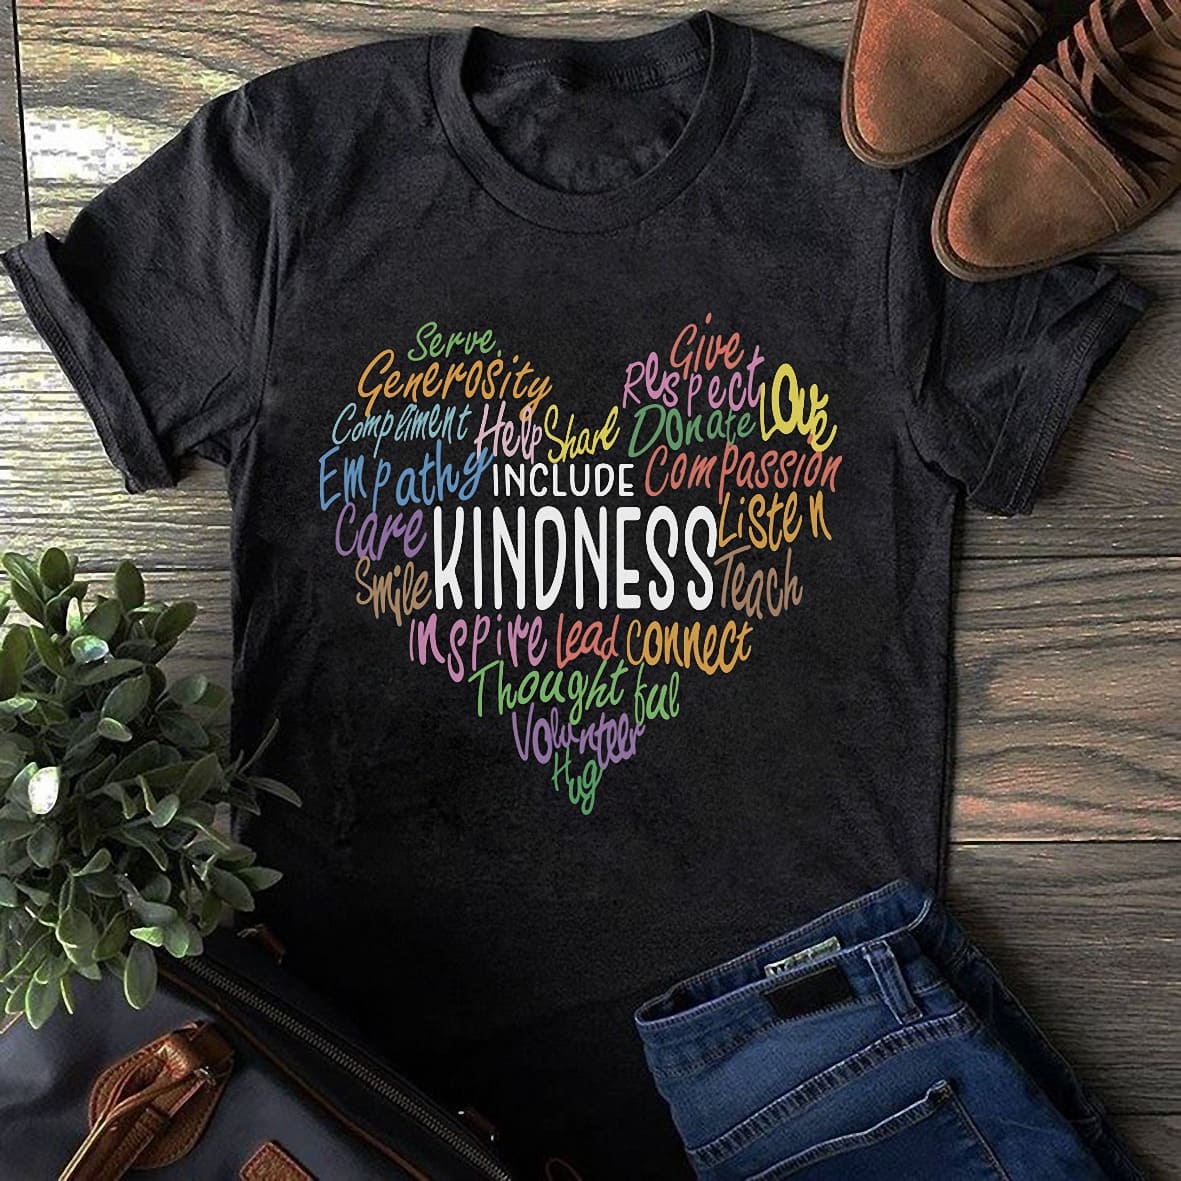 Serve Generosity Give Respect Compliment help snare donate love Kindness